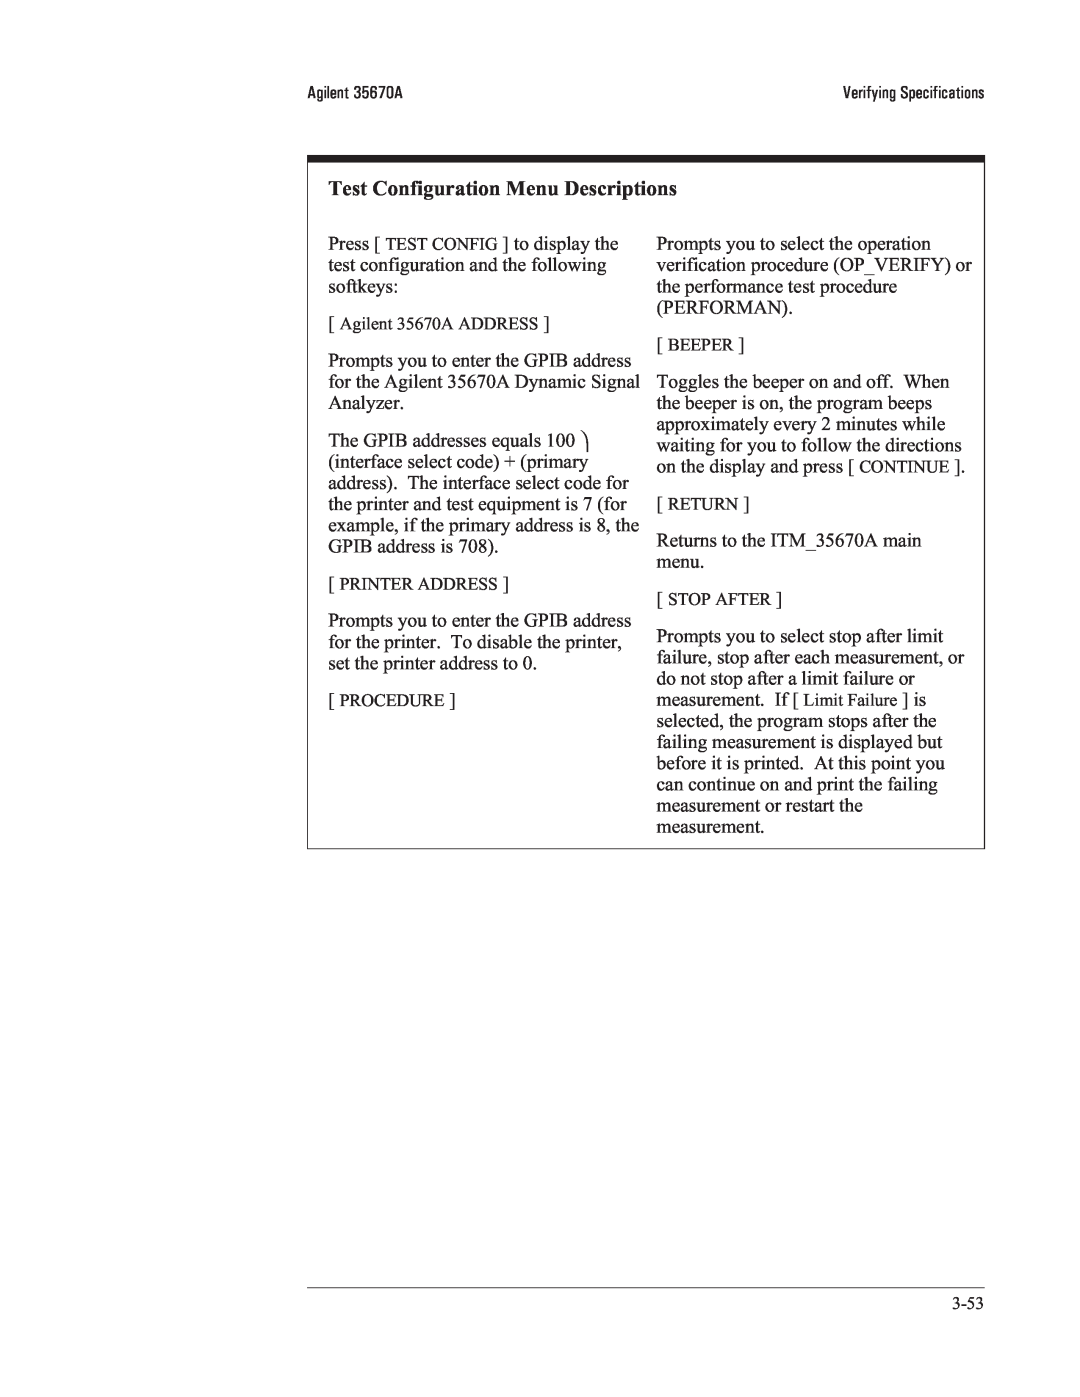 Agilent Technologies 35670-90066 manual Test Configuration Menu Descriptions 